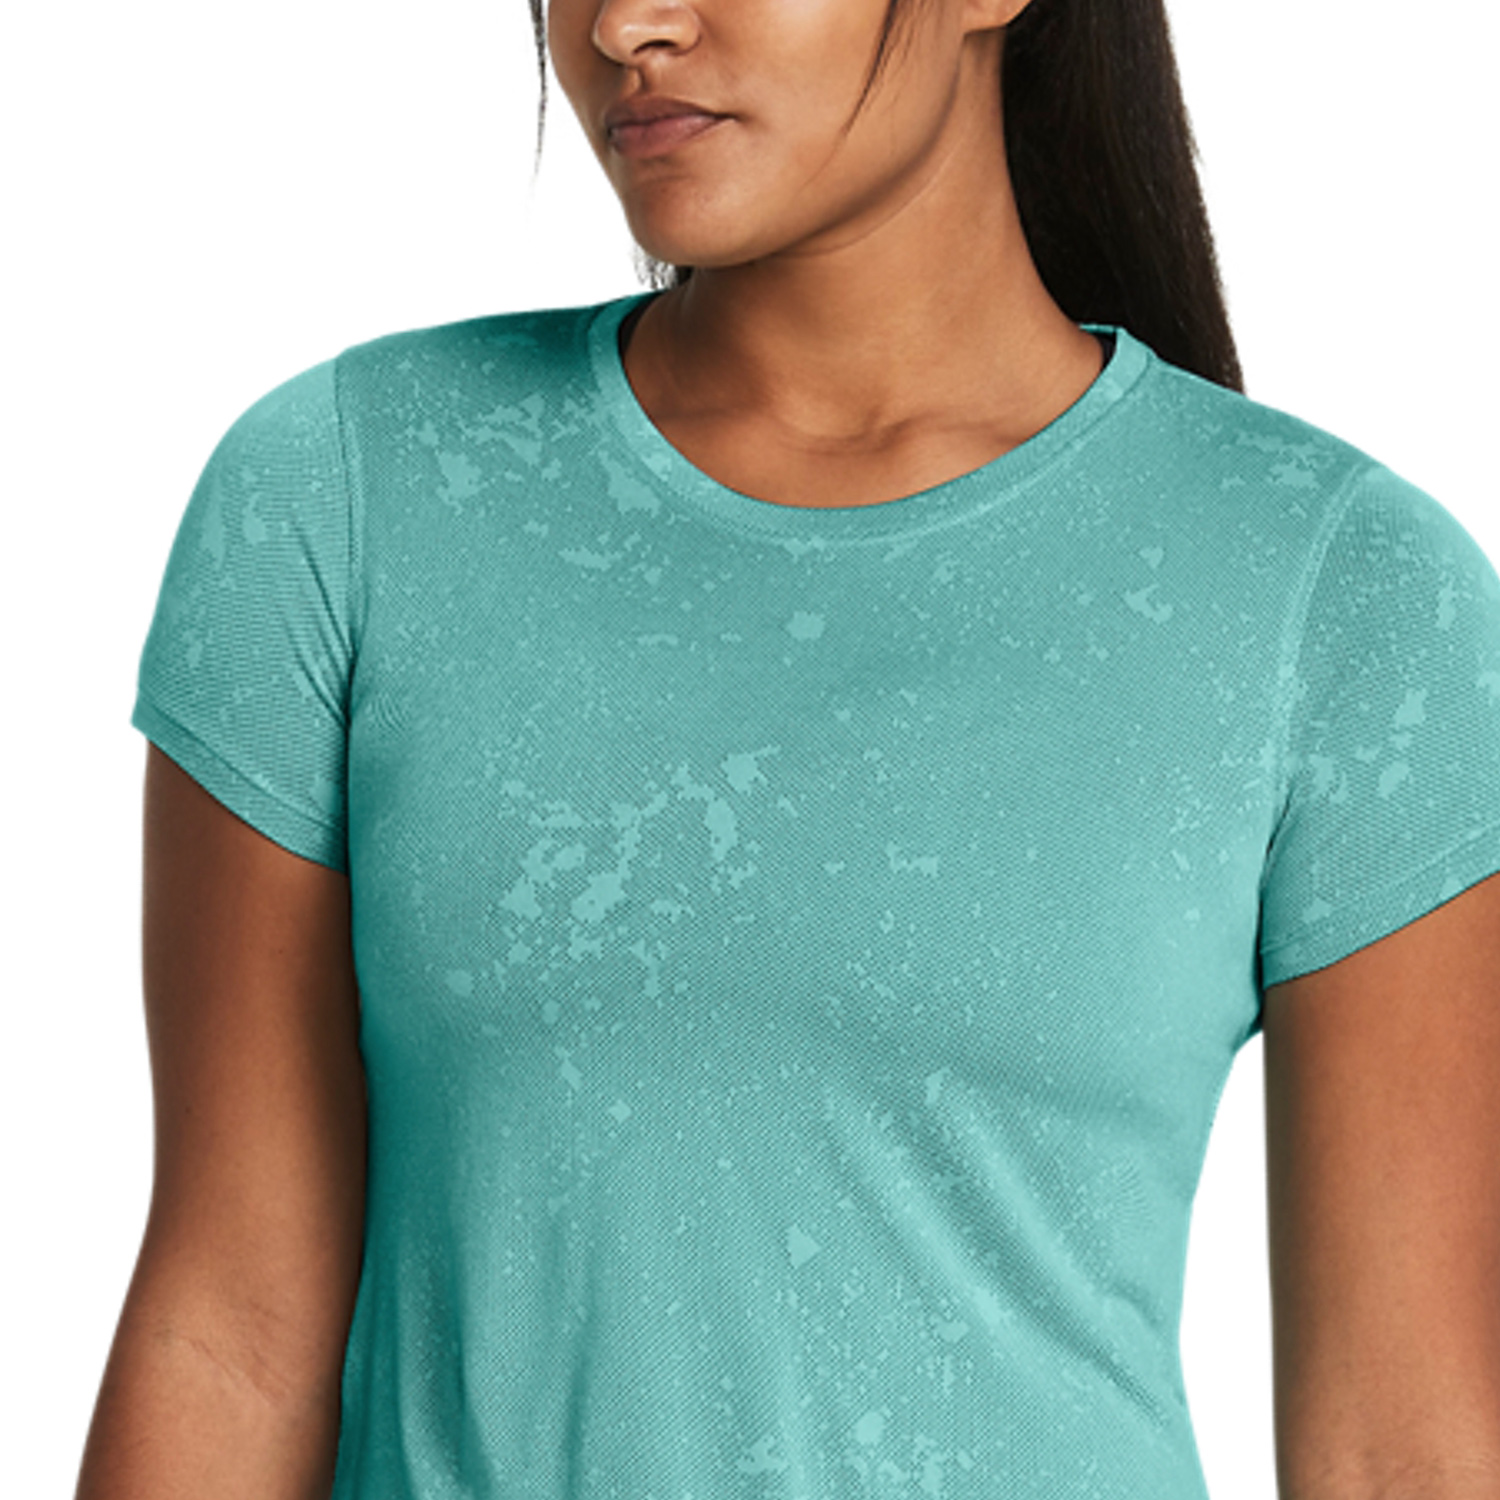 Under Armour Streaker Splatter Camiseta - Radial Turquoise/Reflective